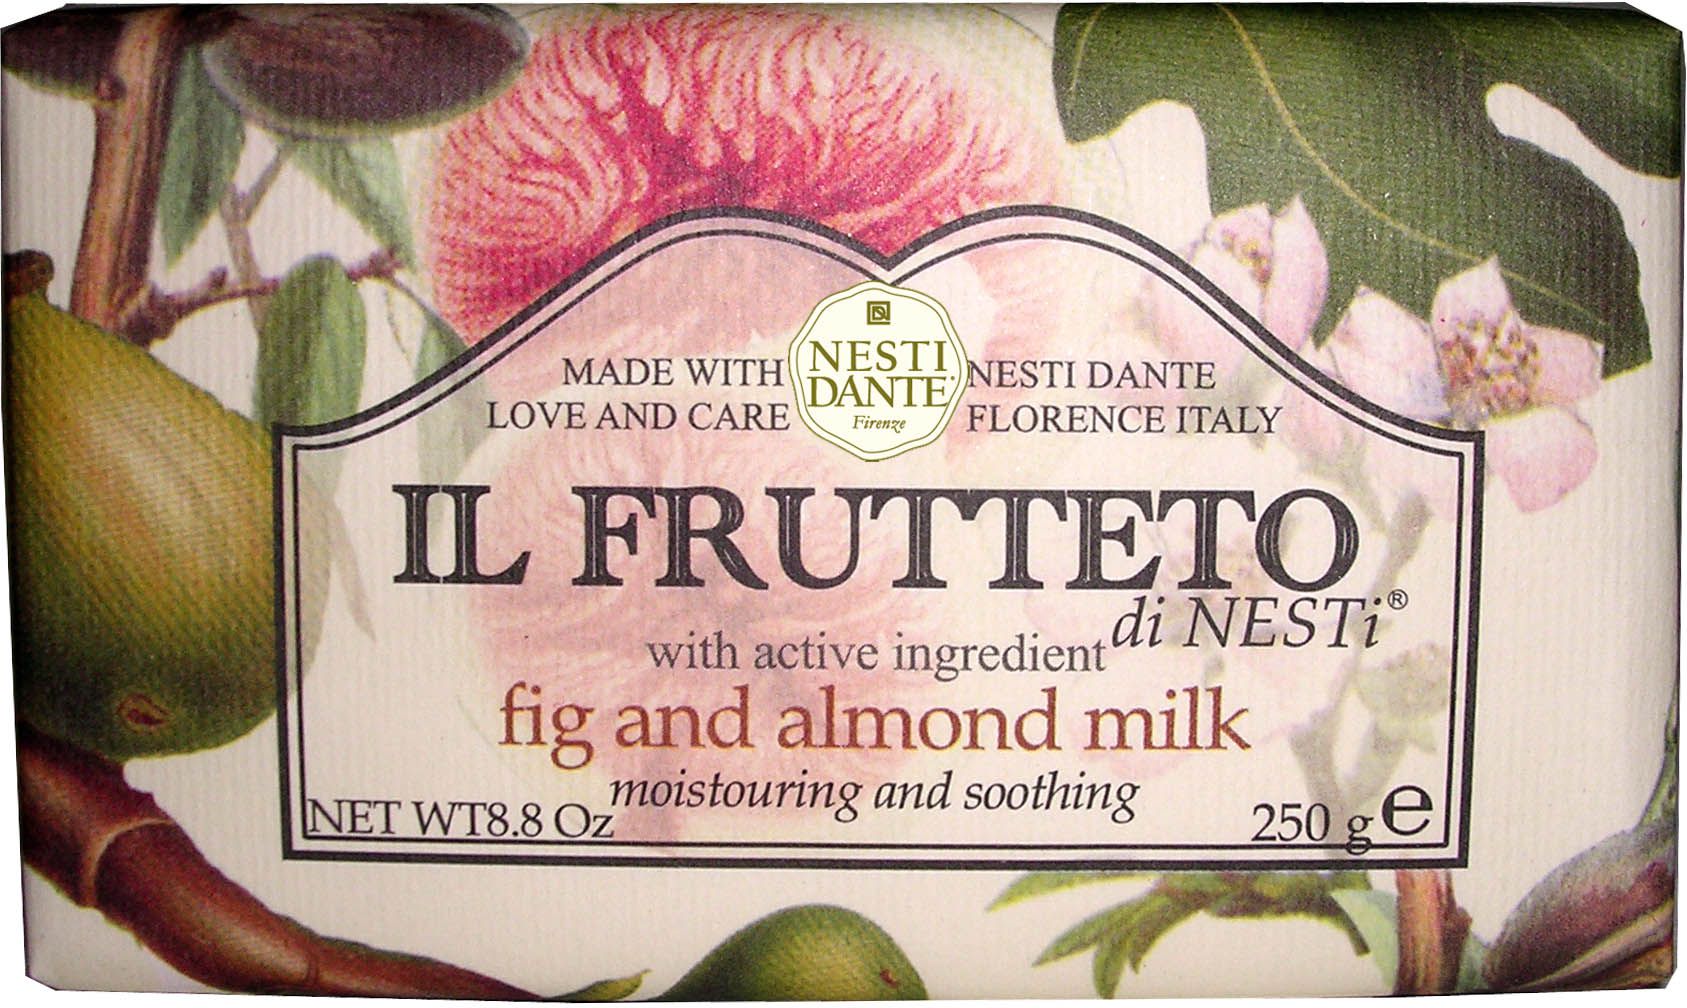 Nesti Dante Il Frutteto Fig And Almond Milk mydlo toaletowe 250g 837524000014 (837524000014)